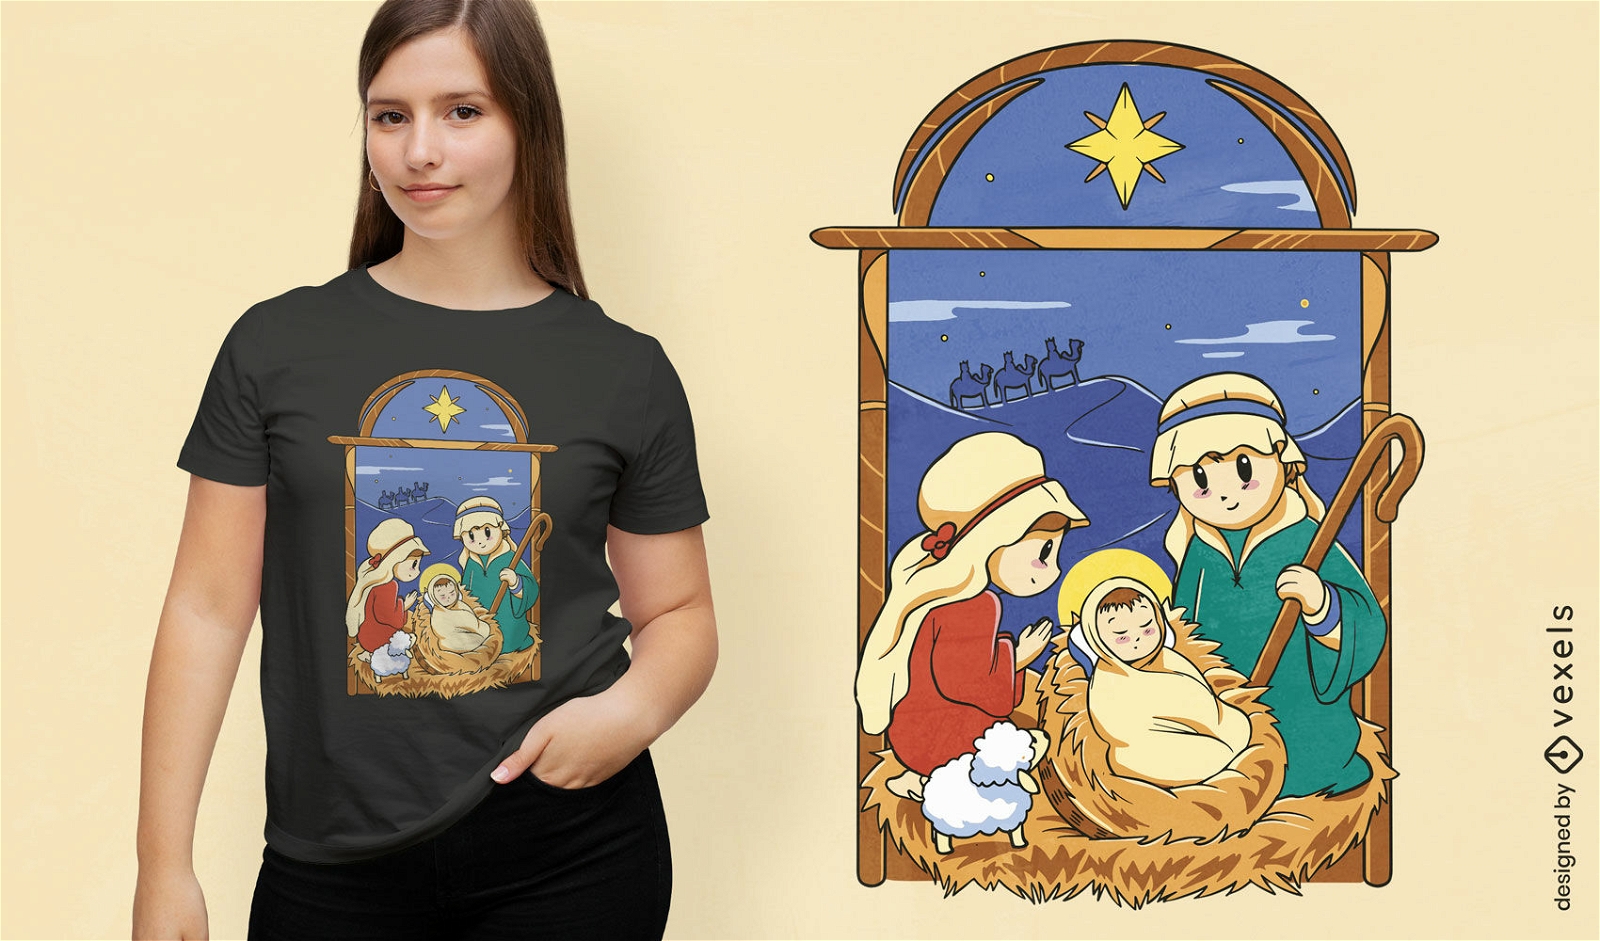 Birth of jesus christmas t-shirt design